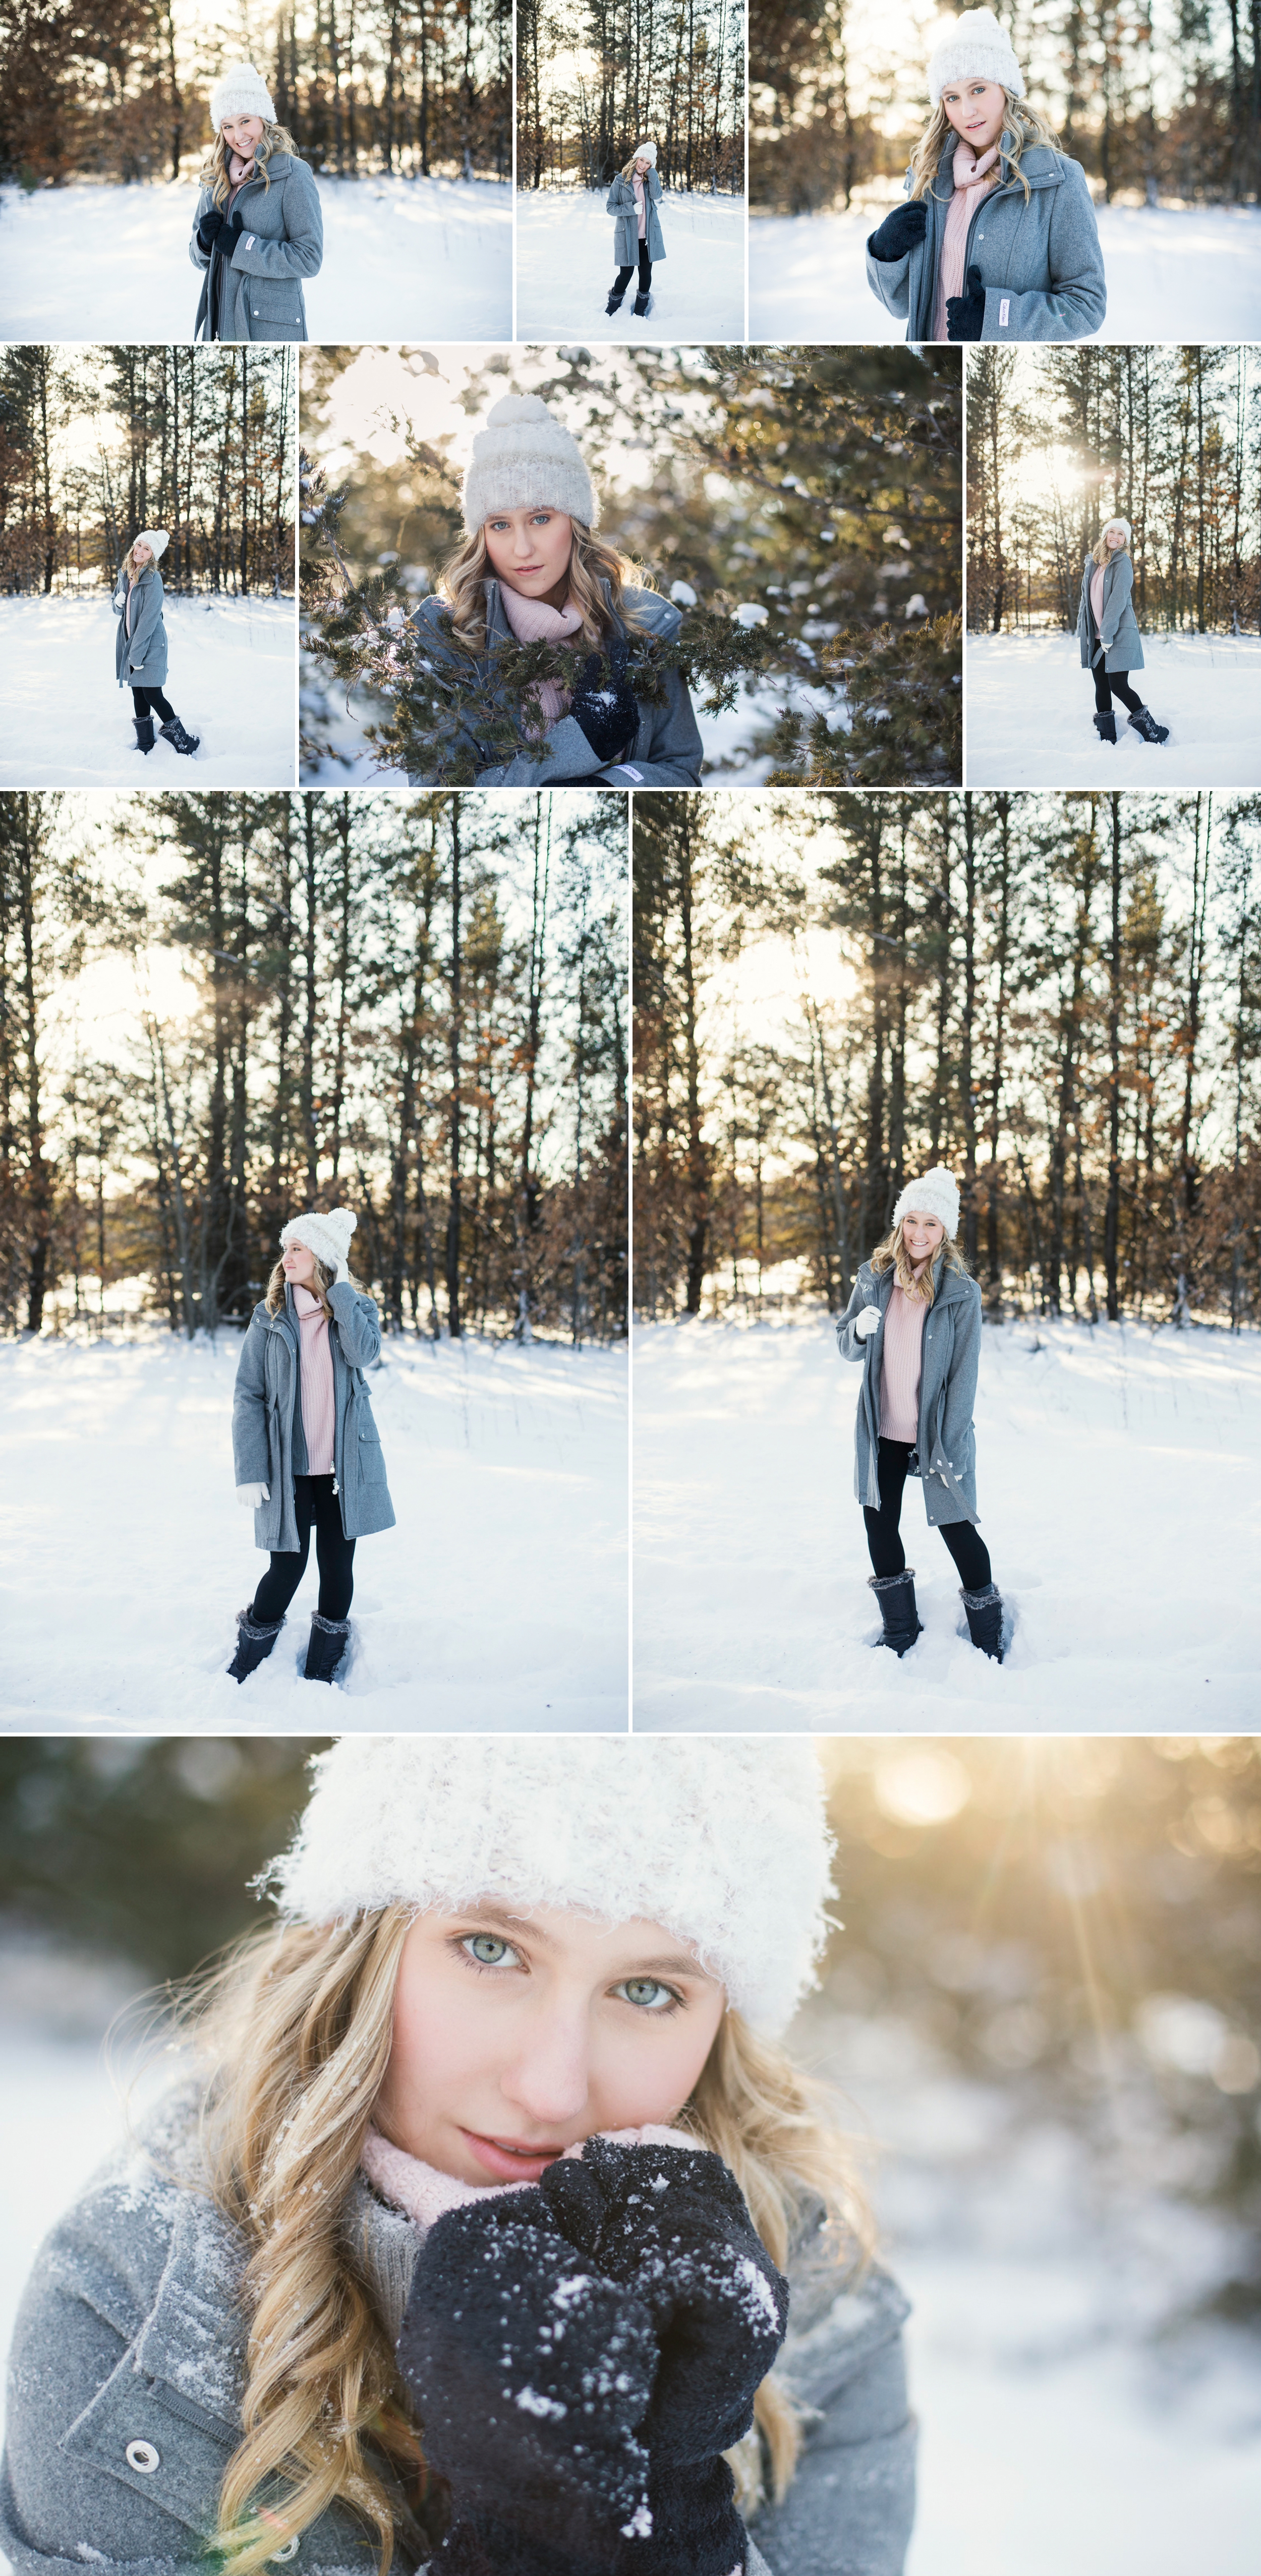 All Season photography winter session by True Moua senior portrait photographer.